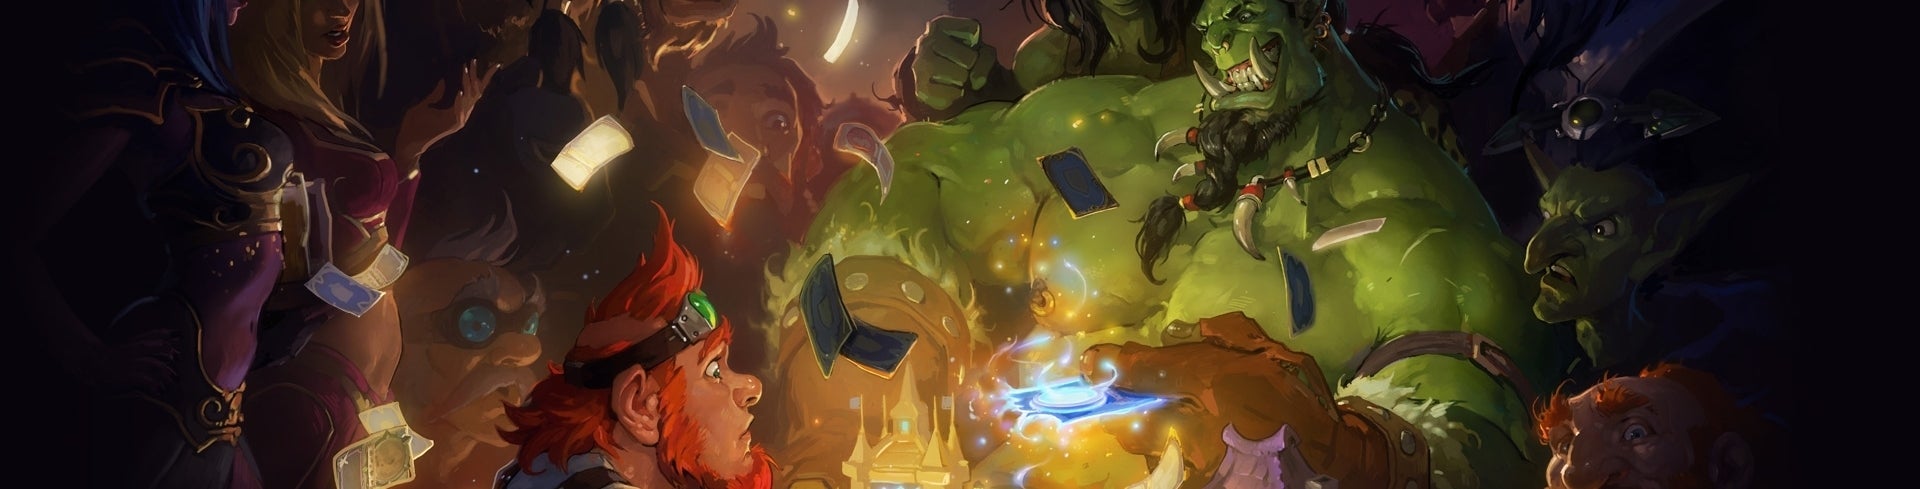 Immagine di Hearthstone: Heroes of Warcraft - prova